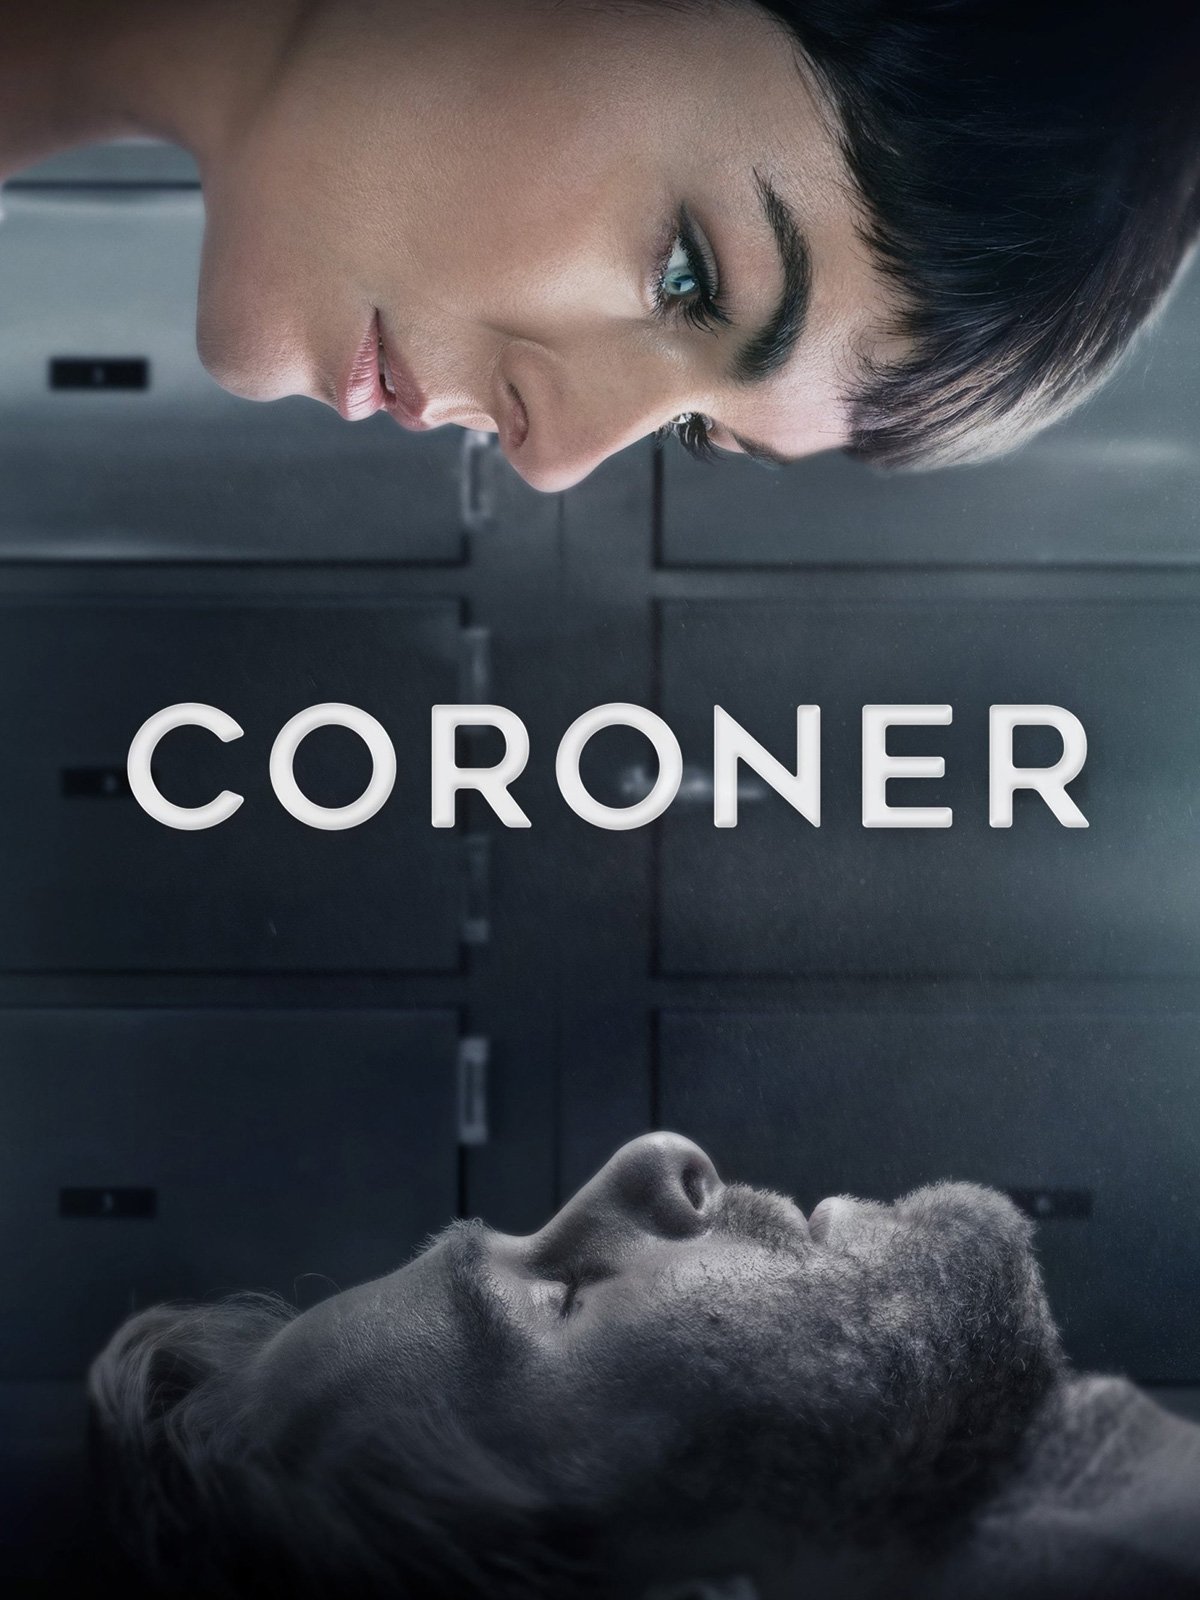 Coroner - Saison 1